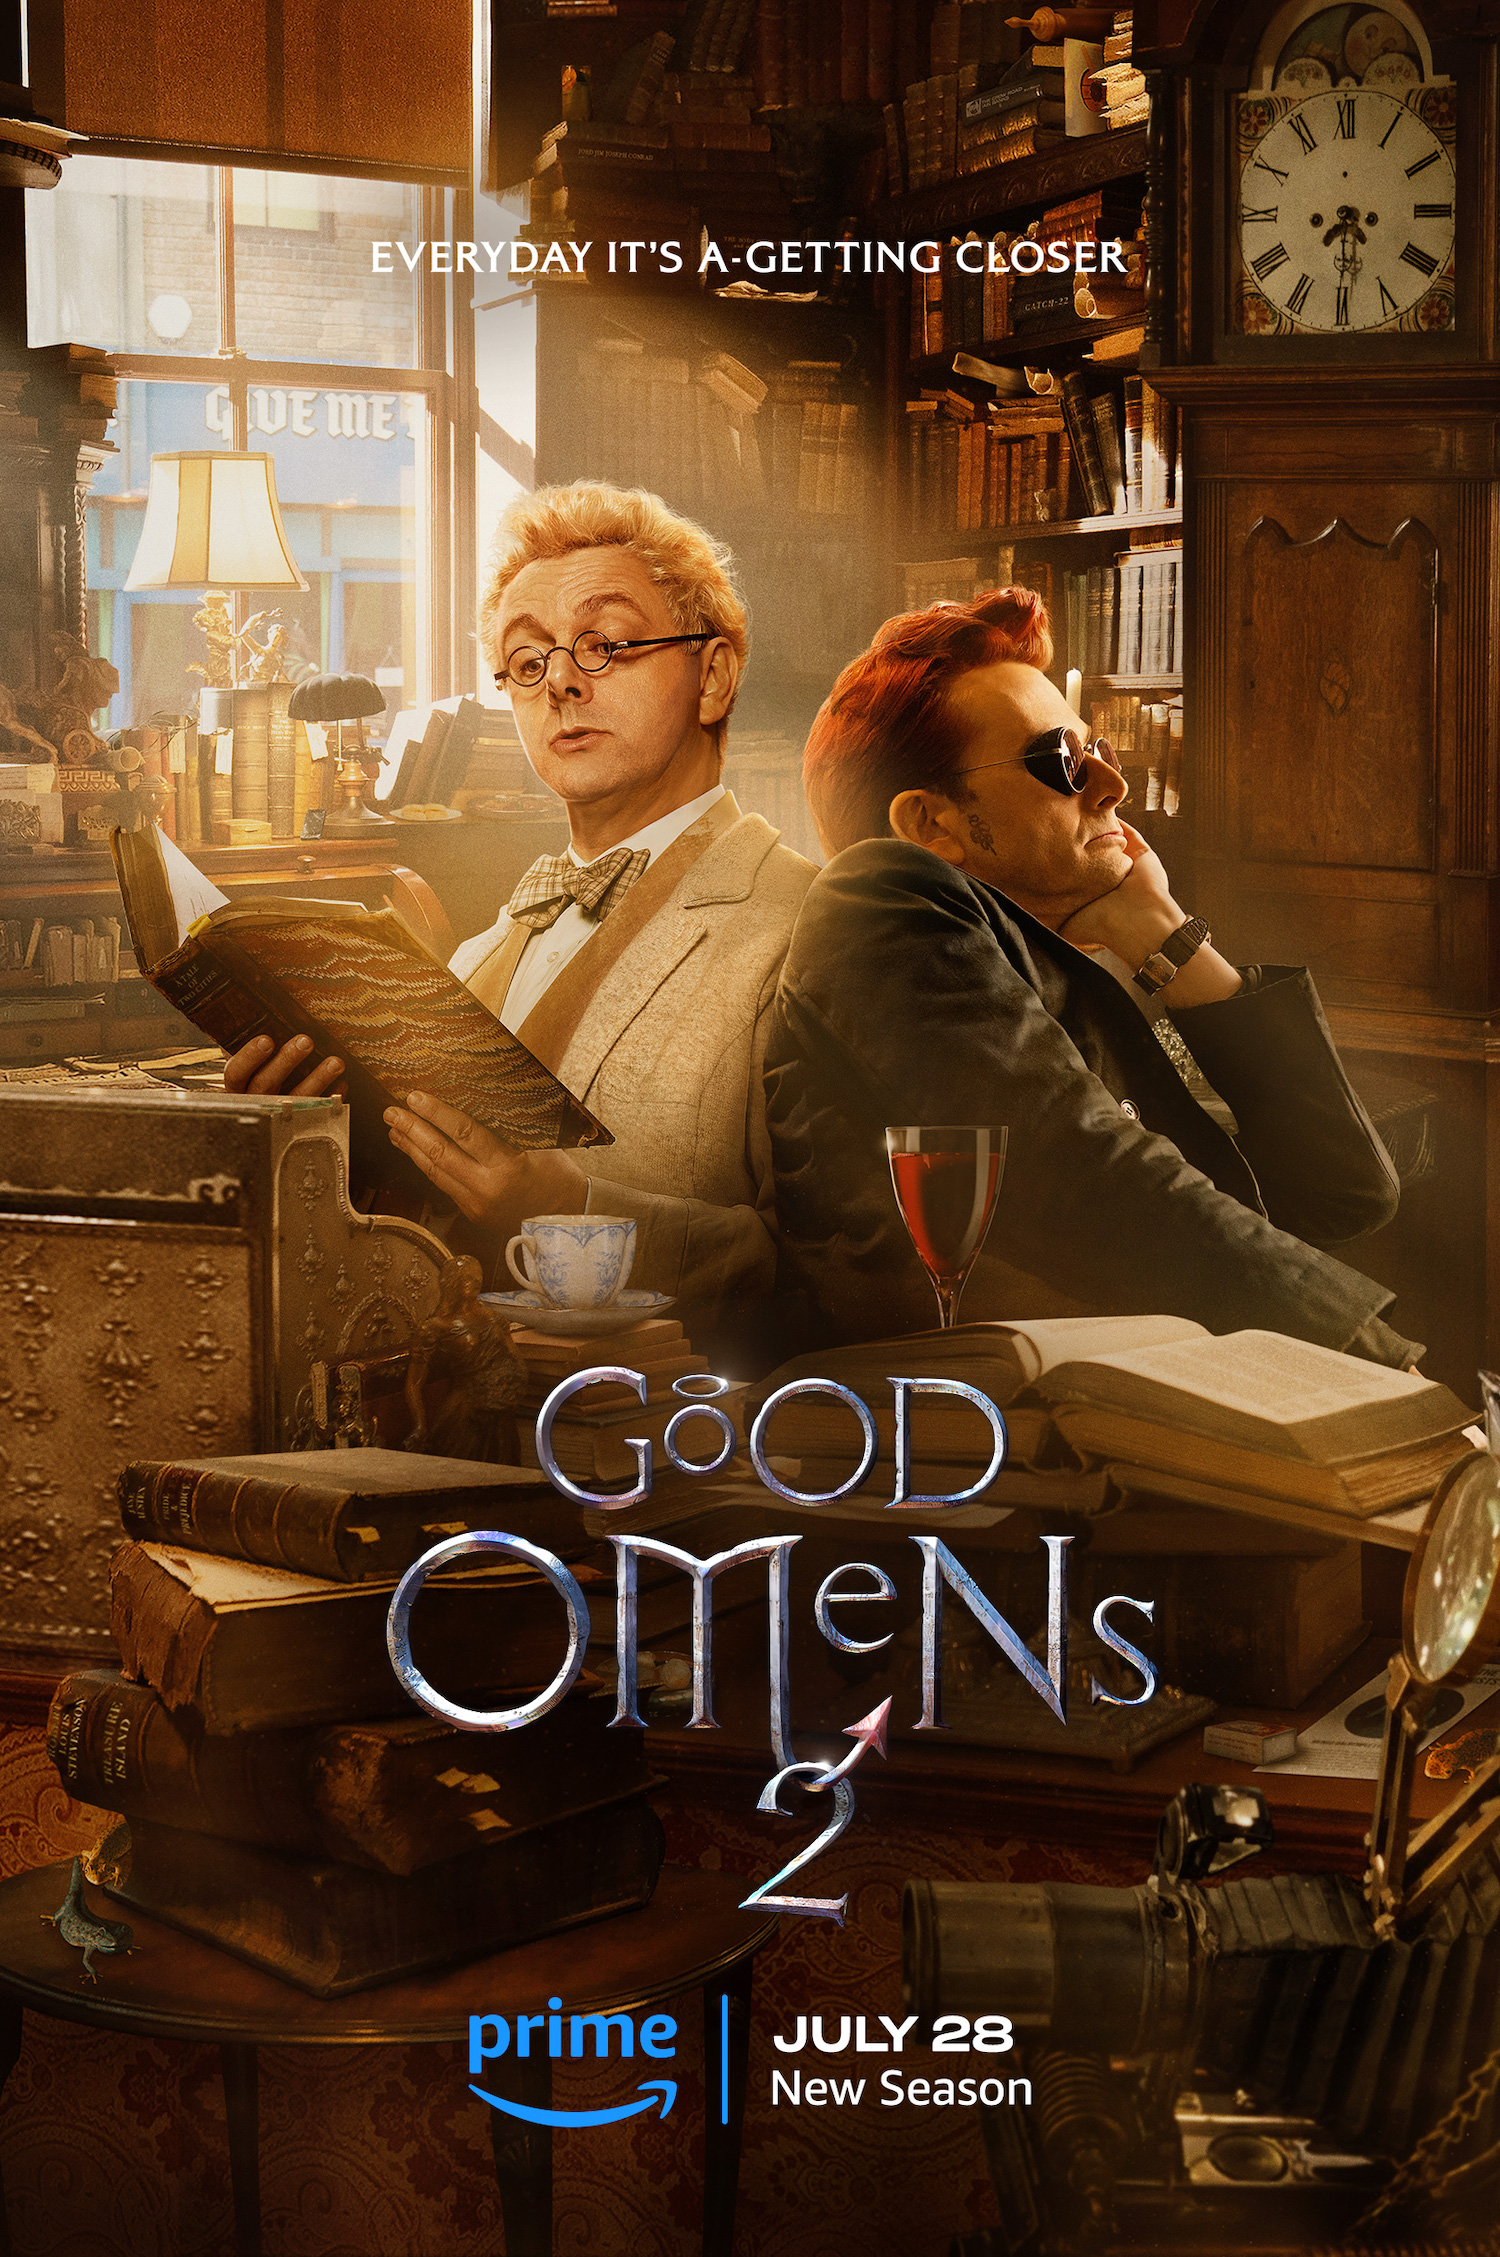 Michael Sheen and David Tennant in 'Good Omens' Season 2 Poster